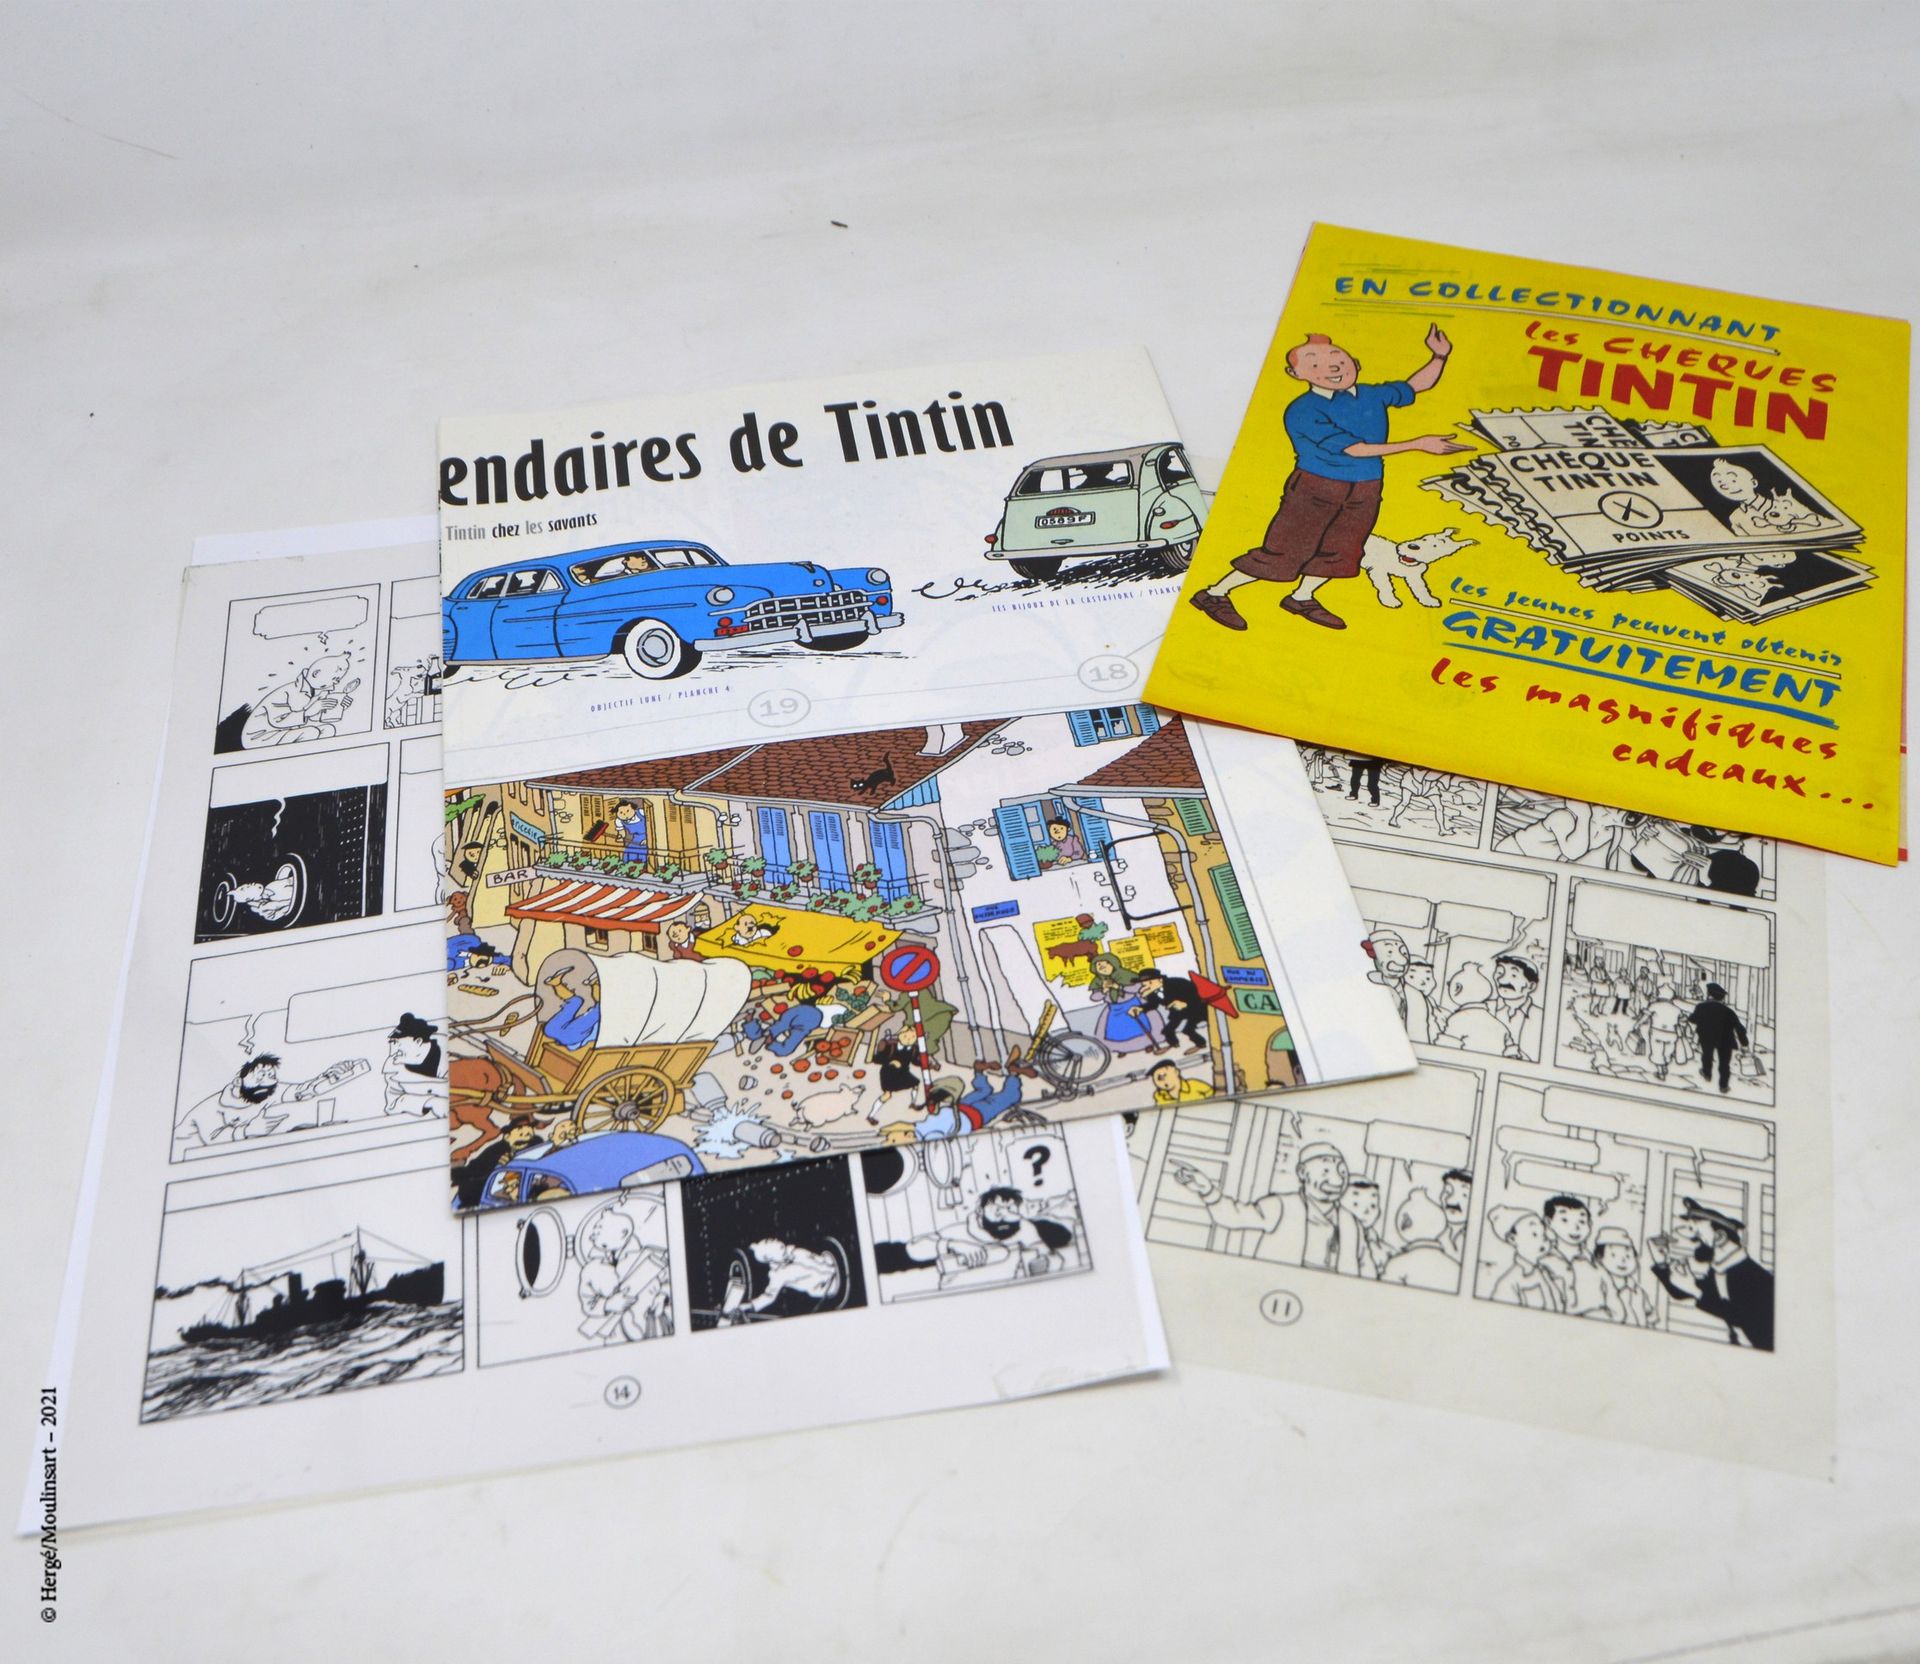 Dérivés HERGÉ/TINTIN/PRODUITS DÉRIVÉS

Lot de produits dérivés papiers Tintin (A&hellip;